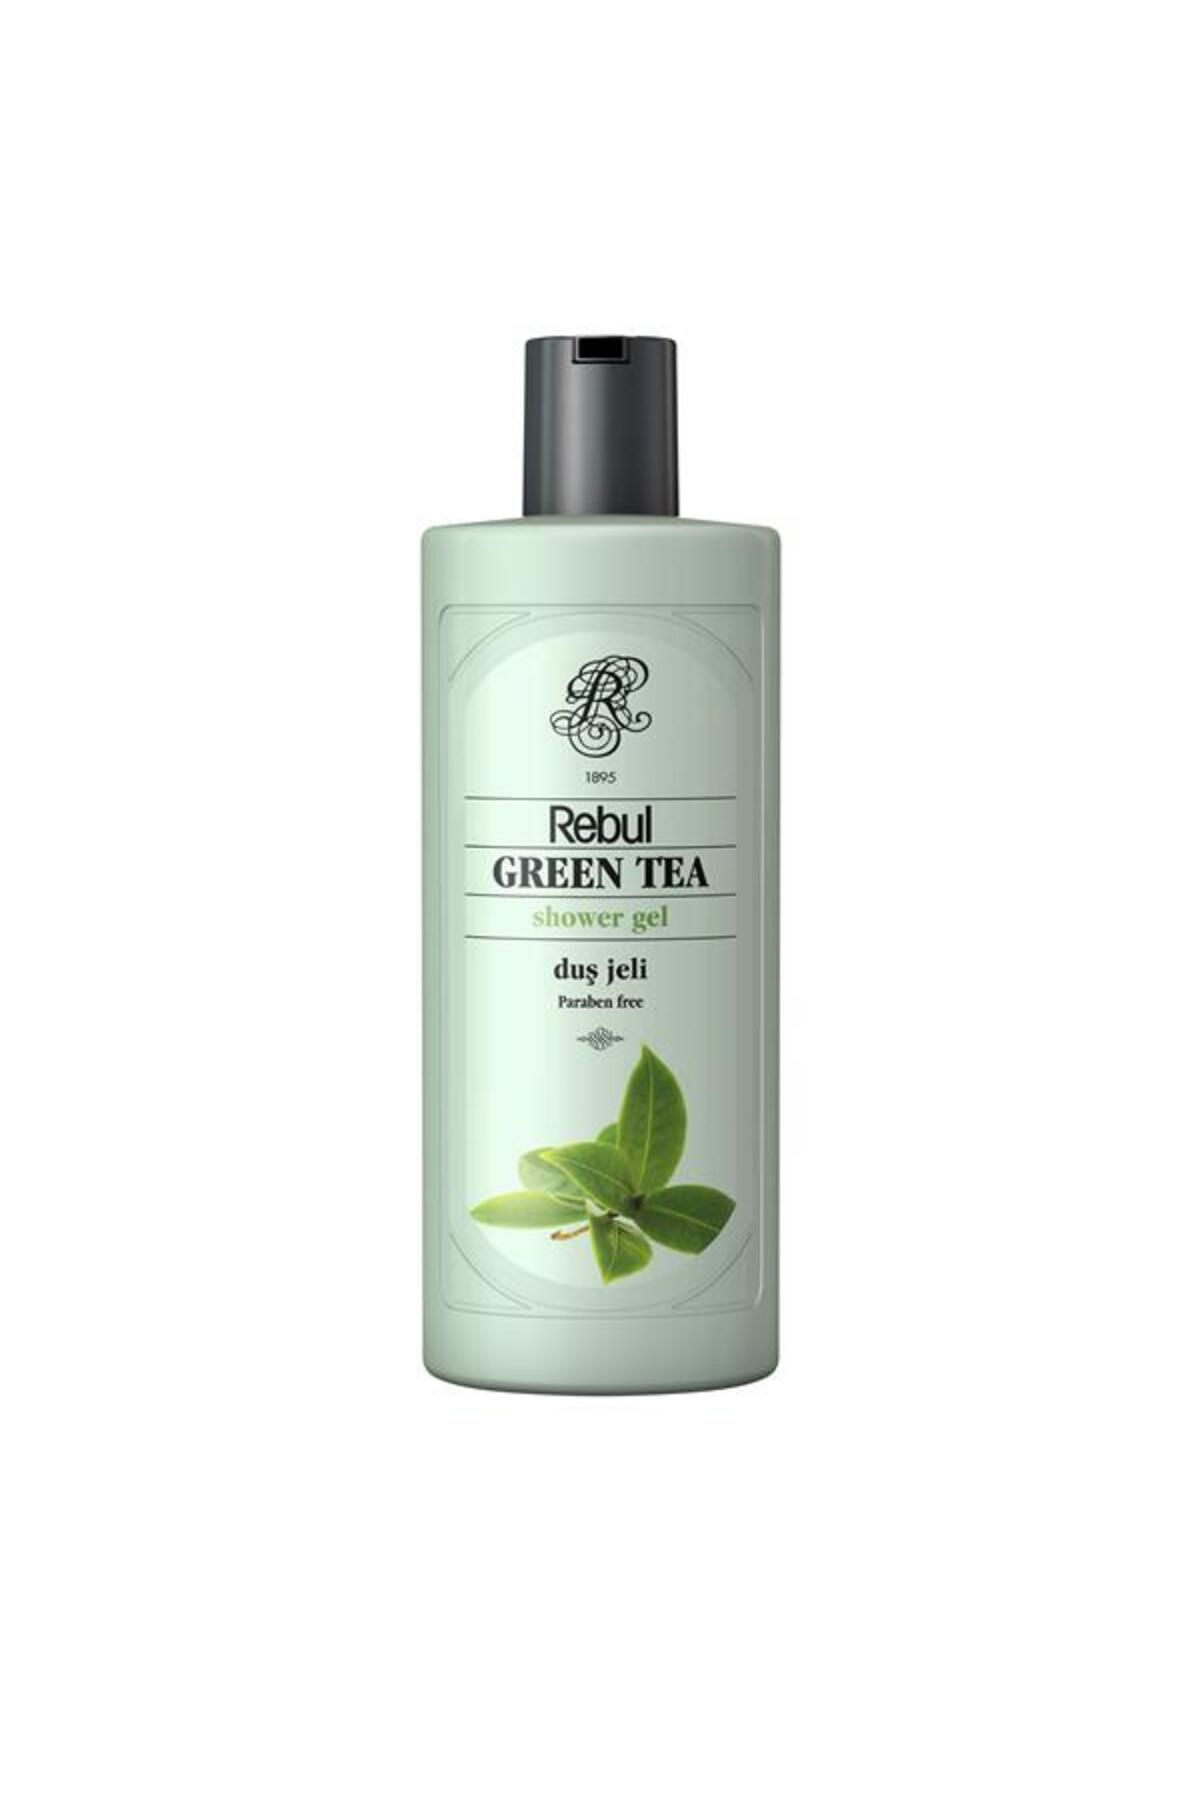 Rebul Duş Jeli 500 ml Green Tea * 3 Adet